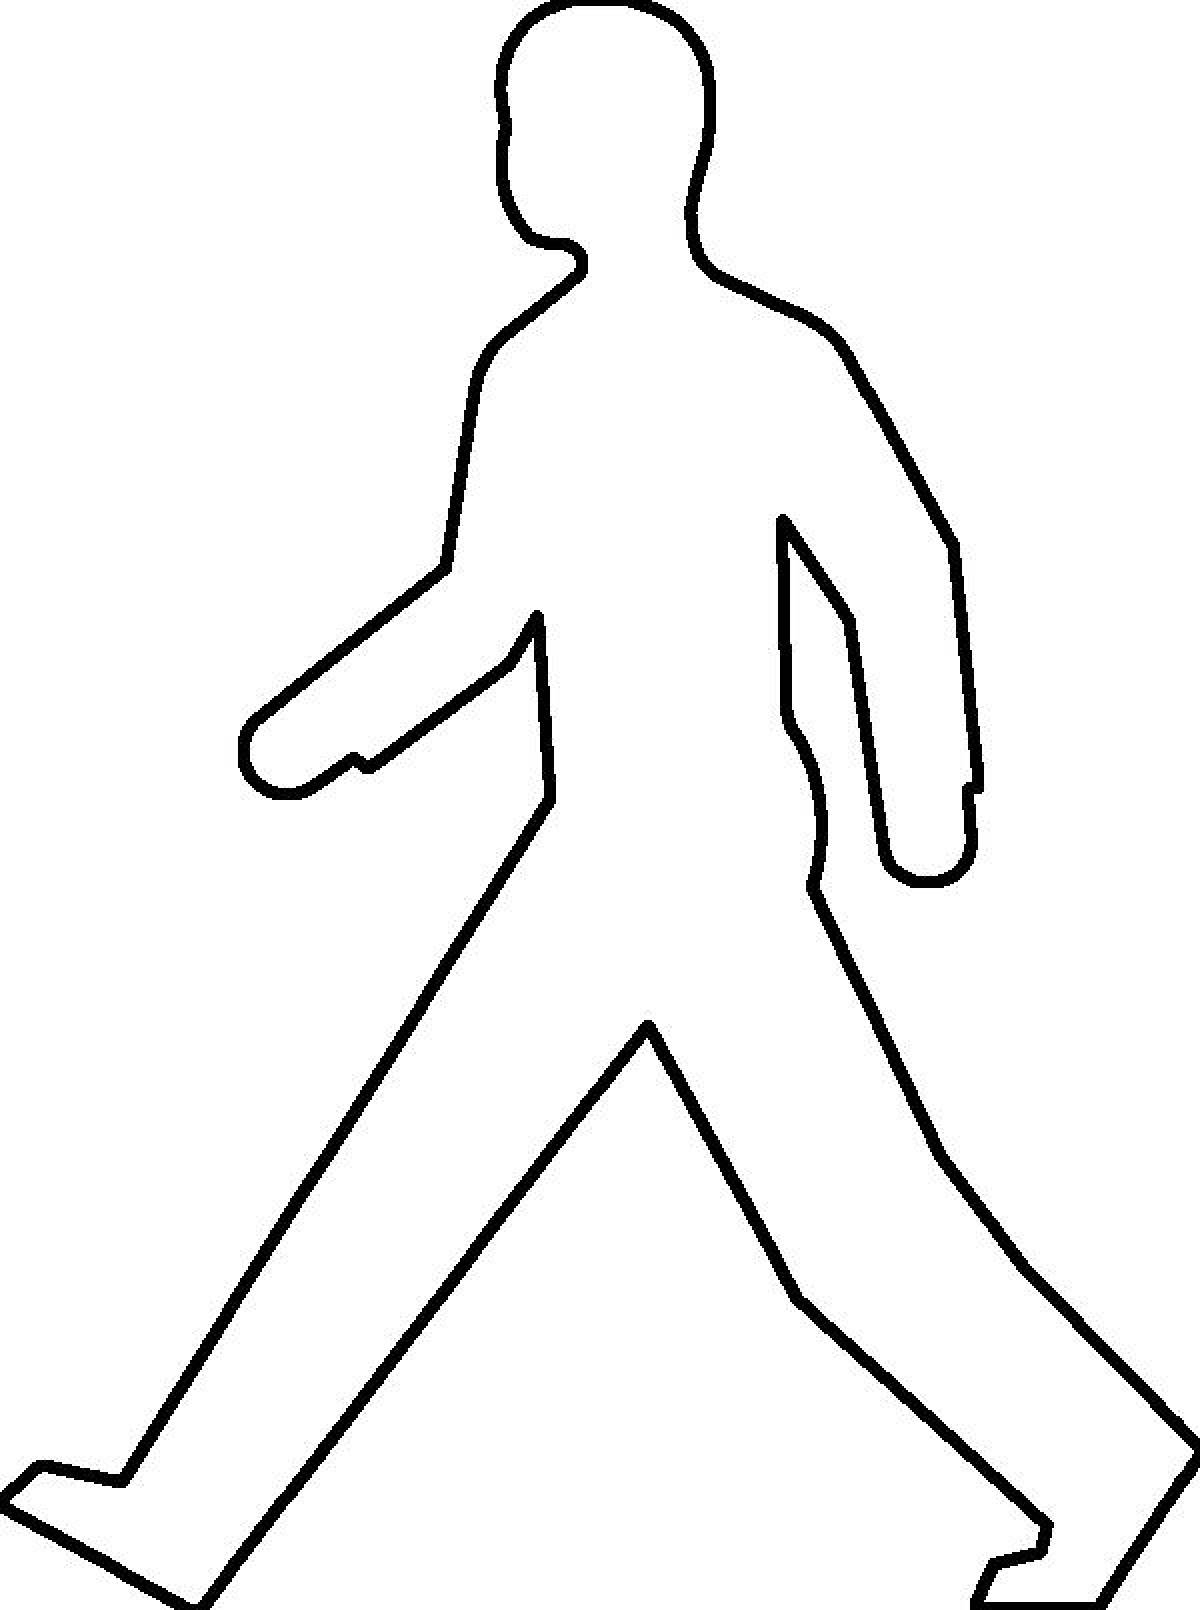 The man is walking